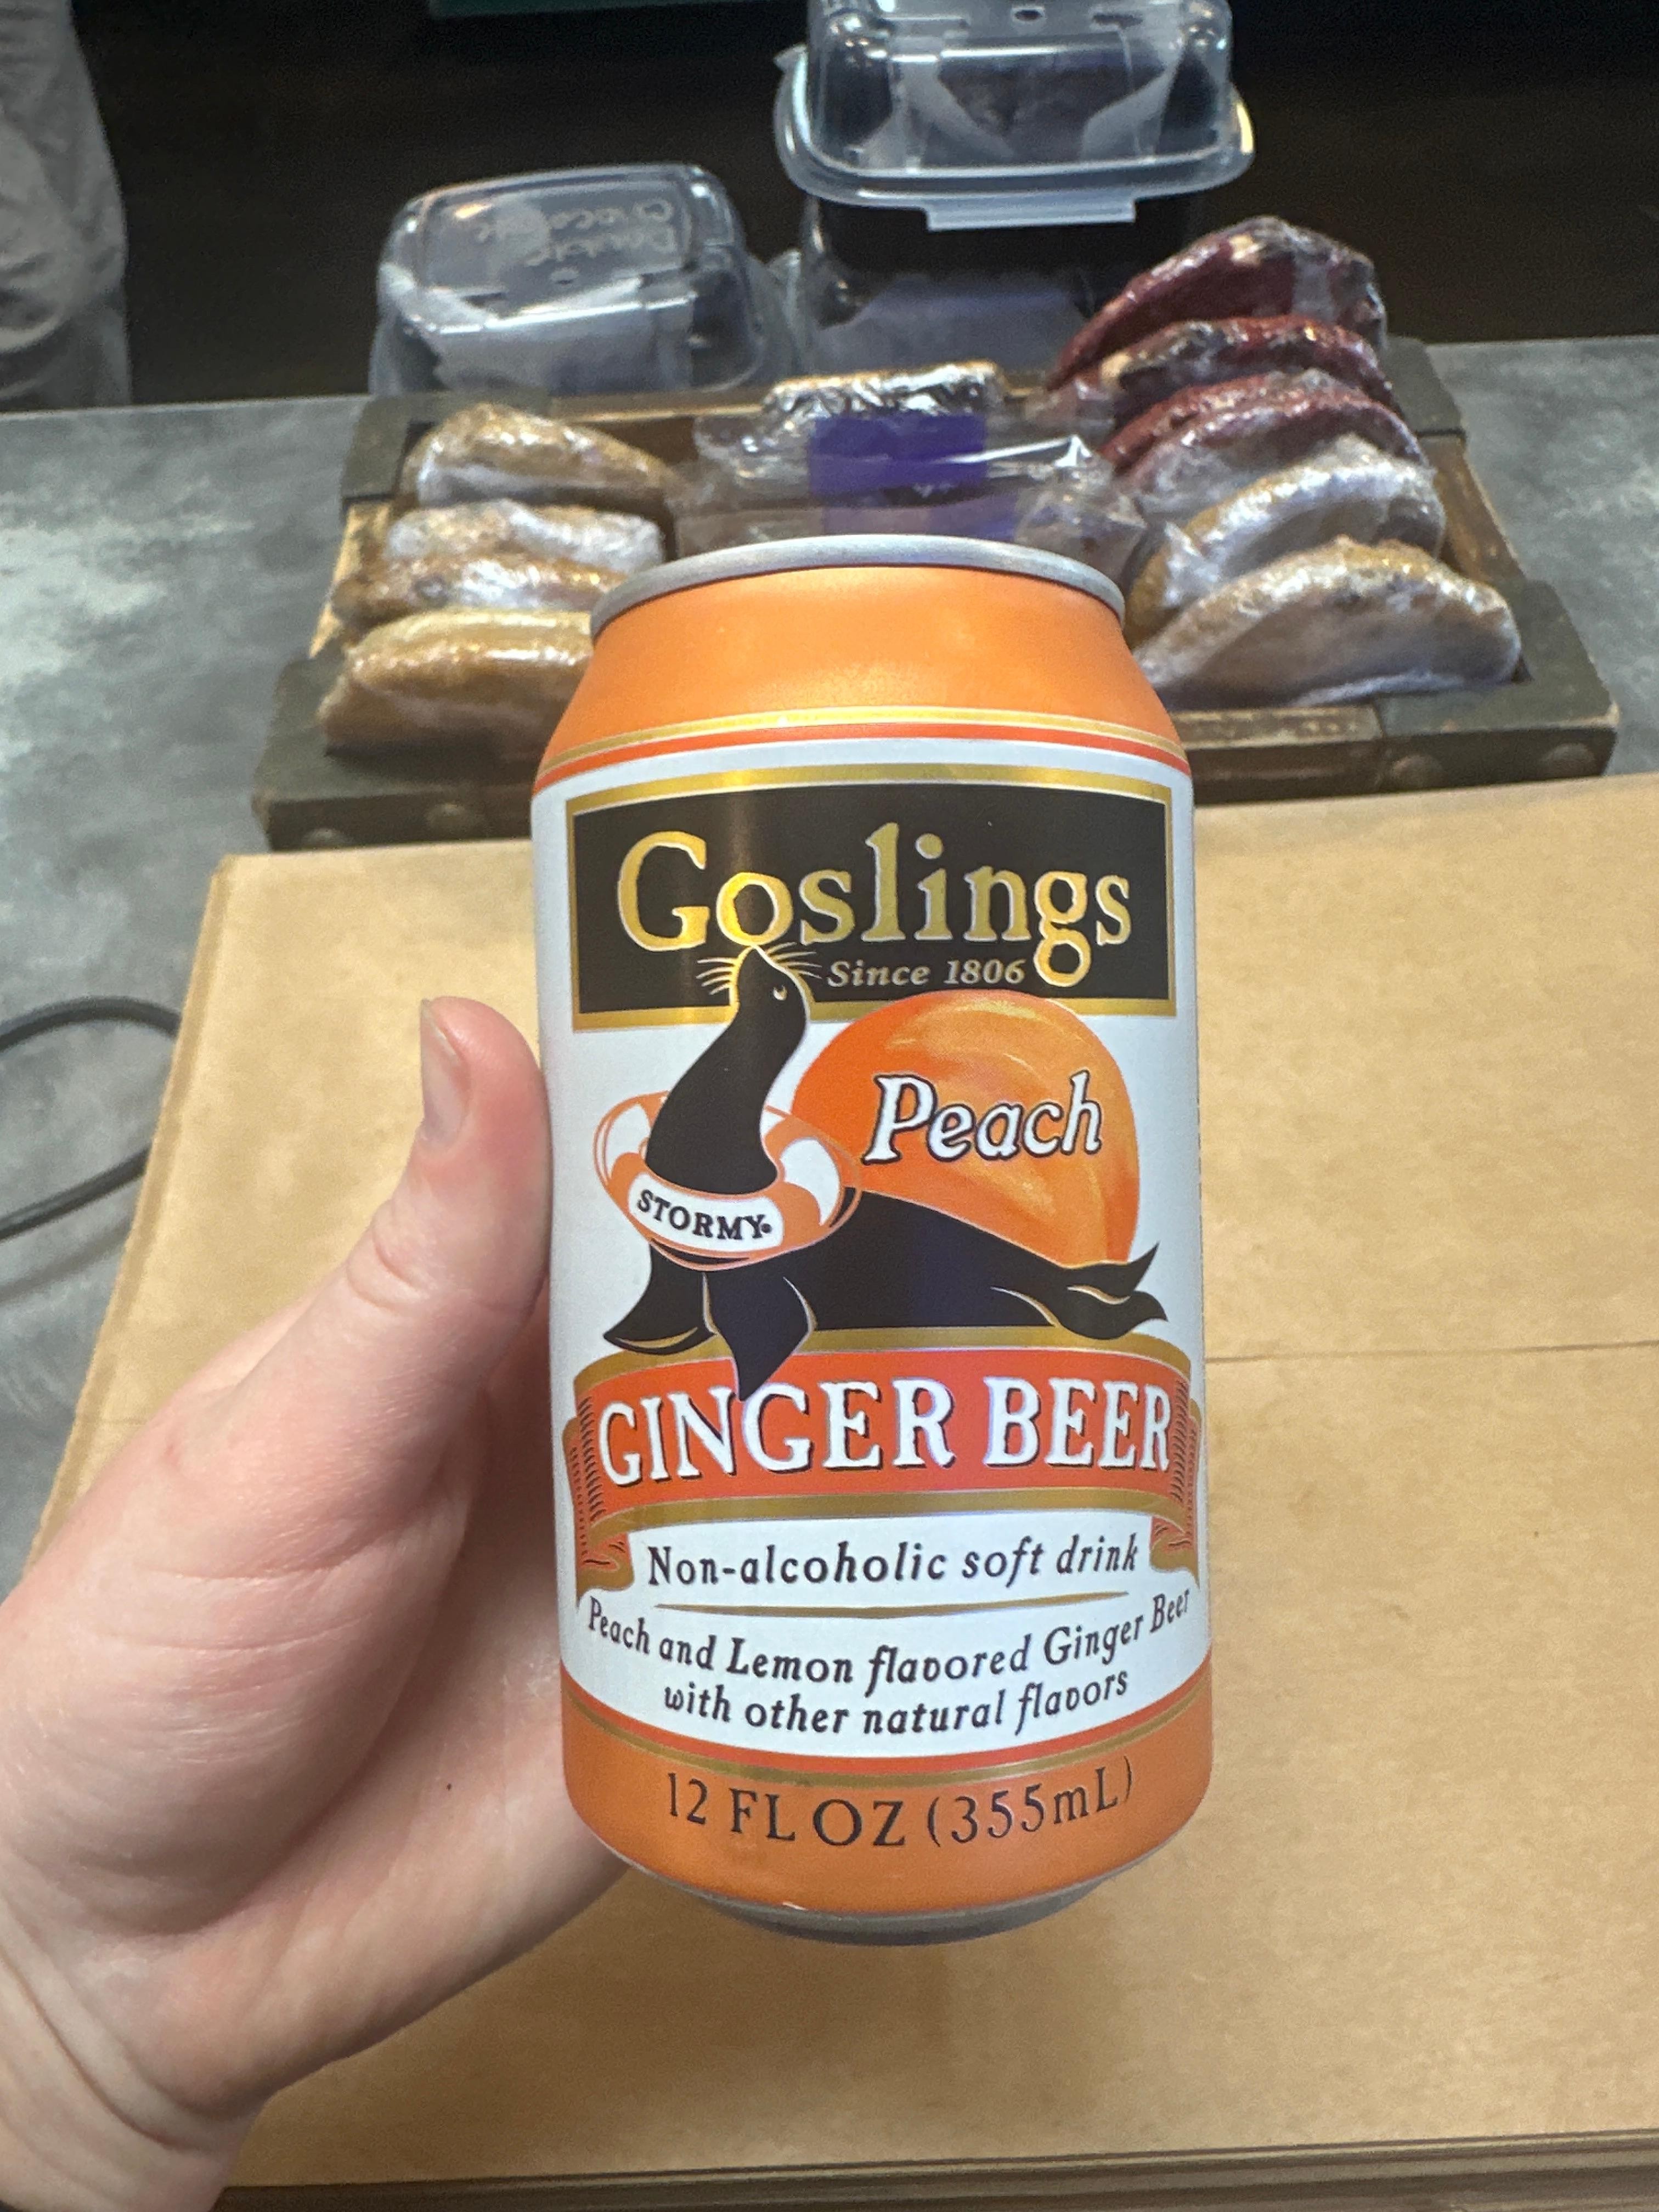 Goslings Peach Ginger Beer 12Fl Oz can